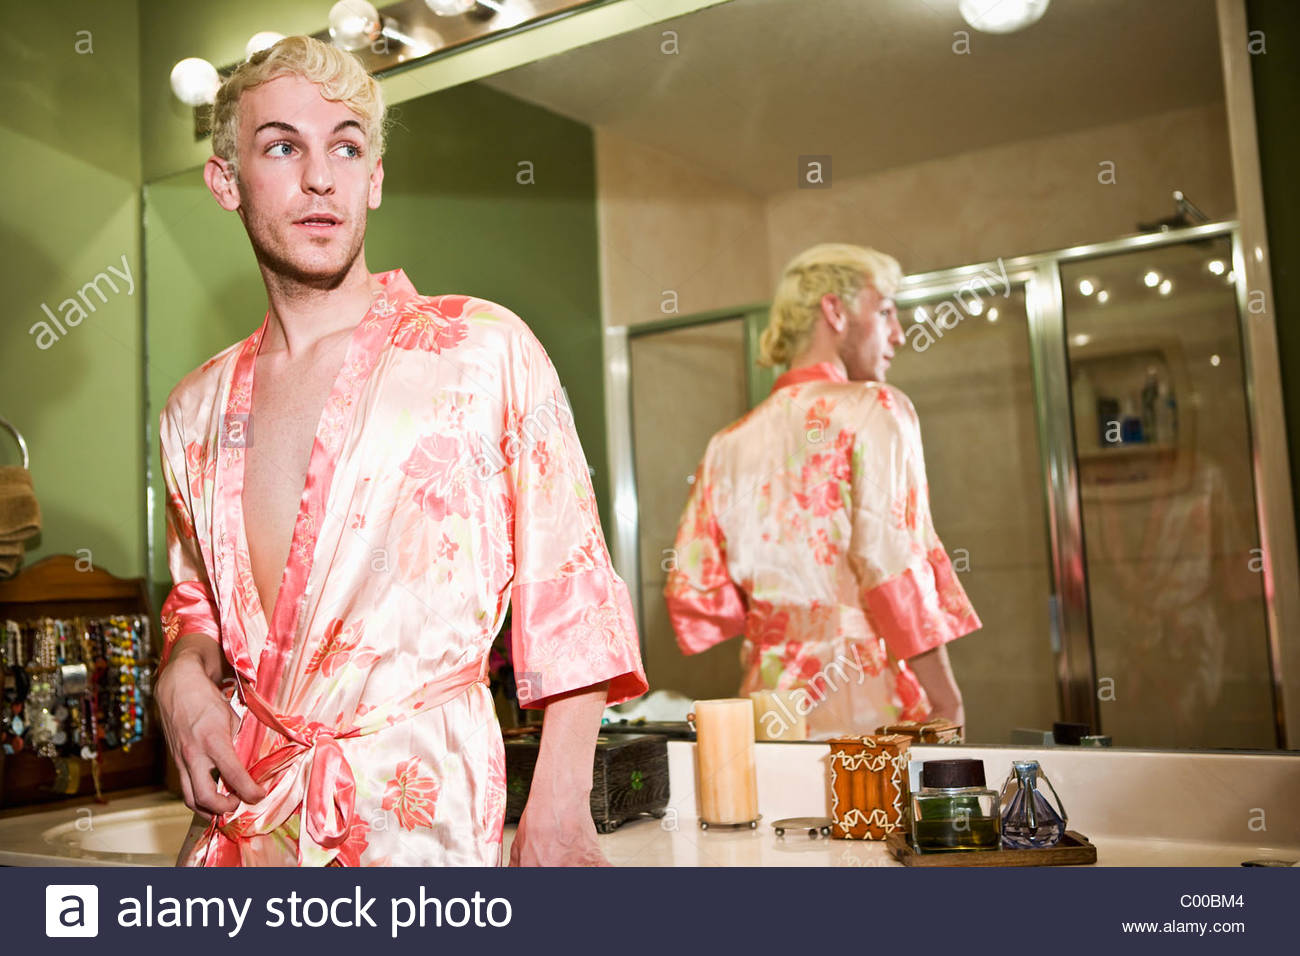 drag-queen-in-silk-robe-in-bathroom-C00BM4.jpg